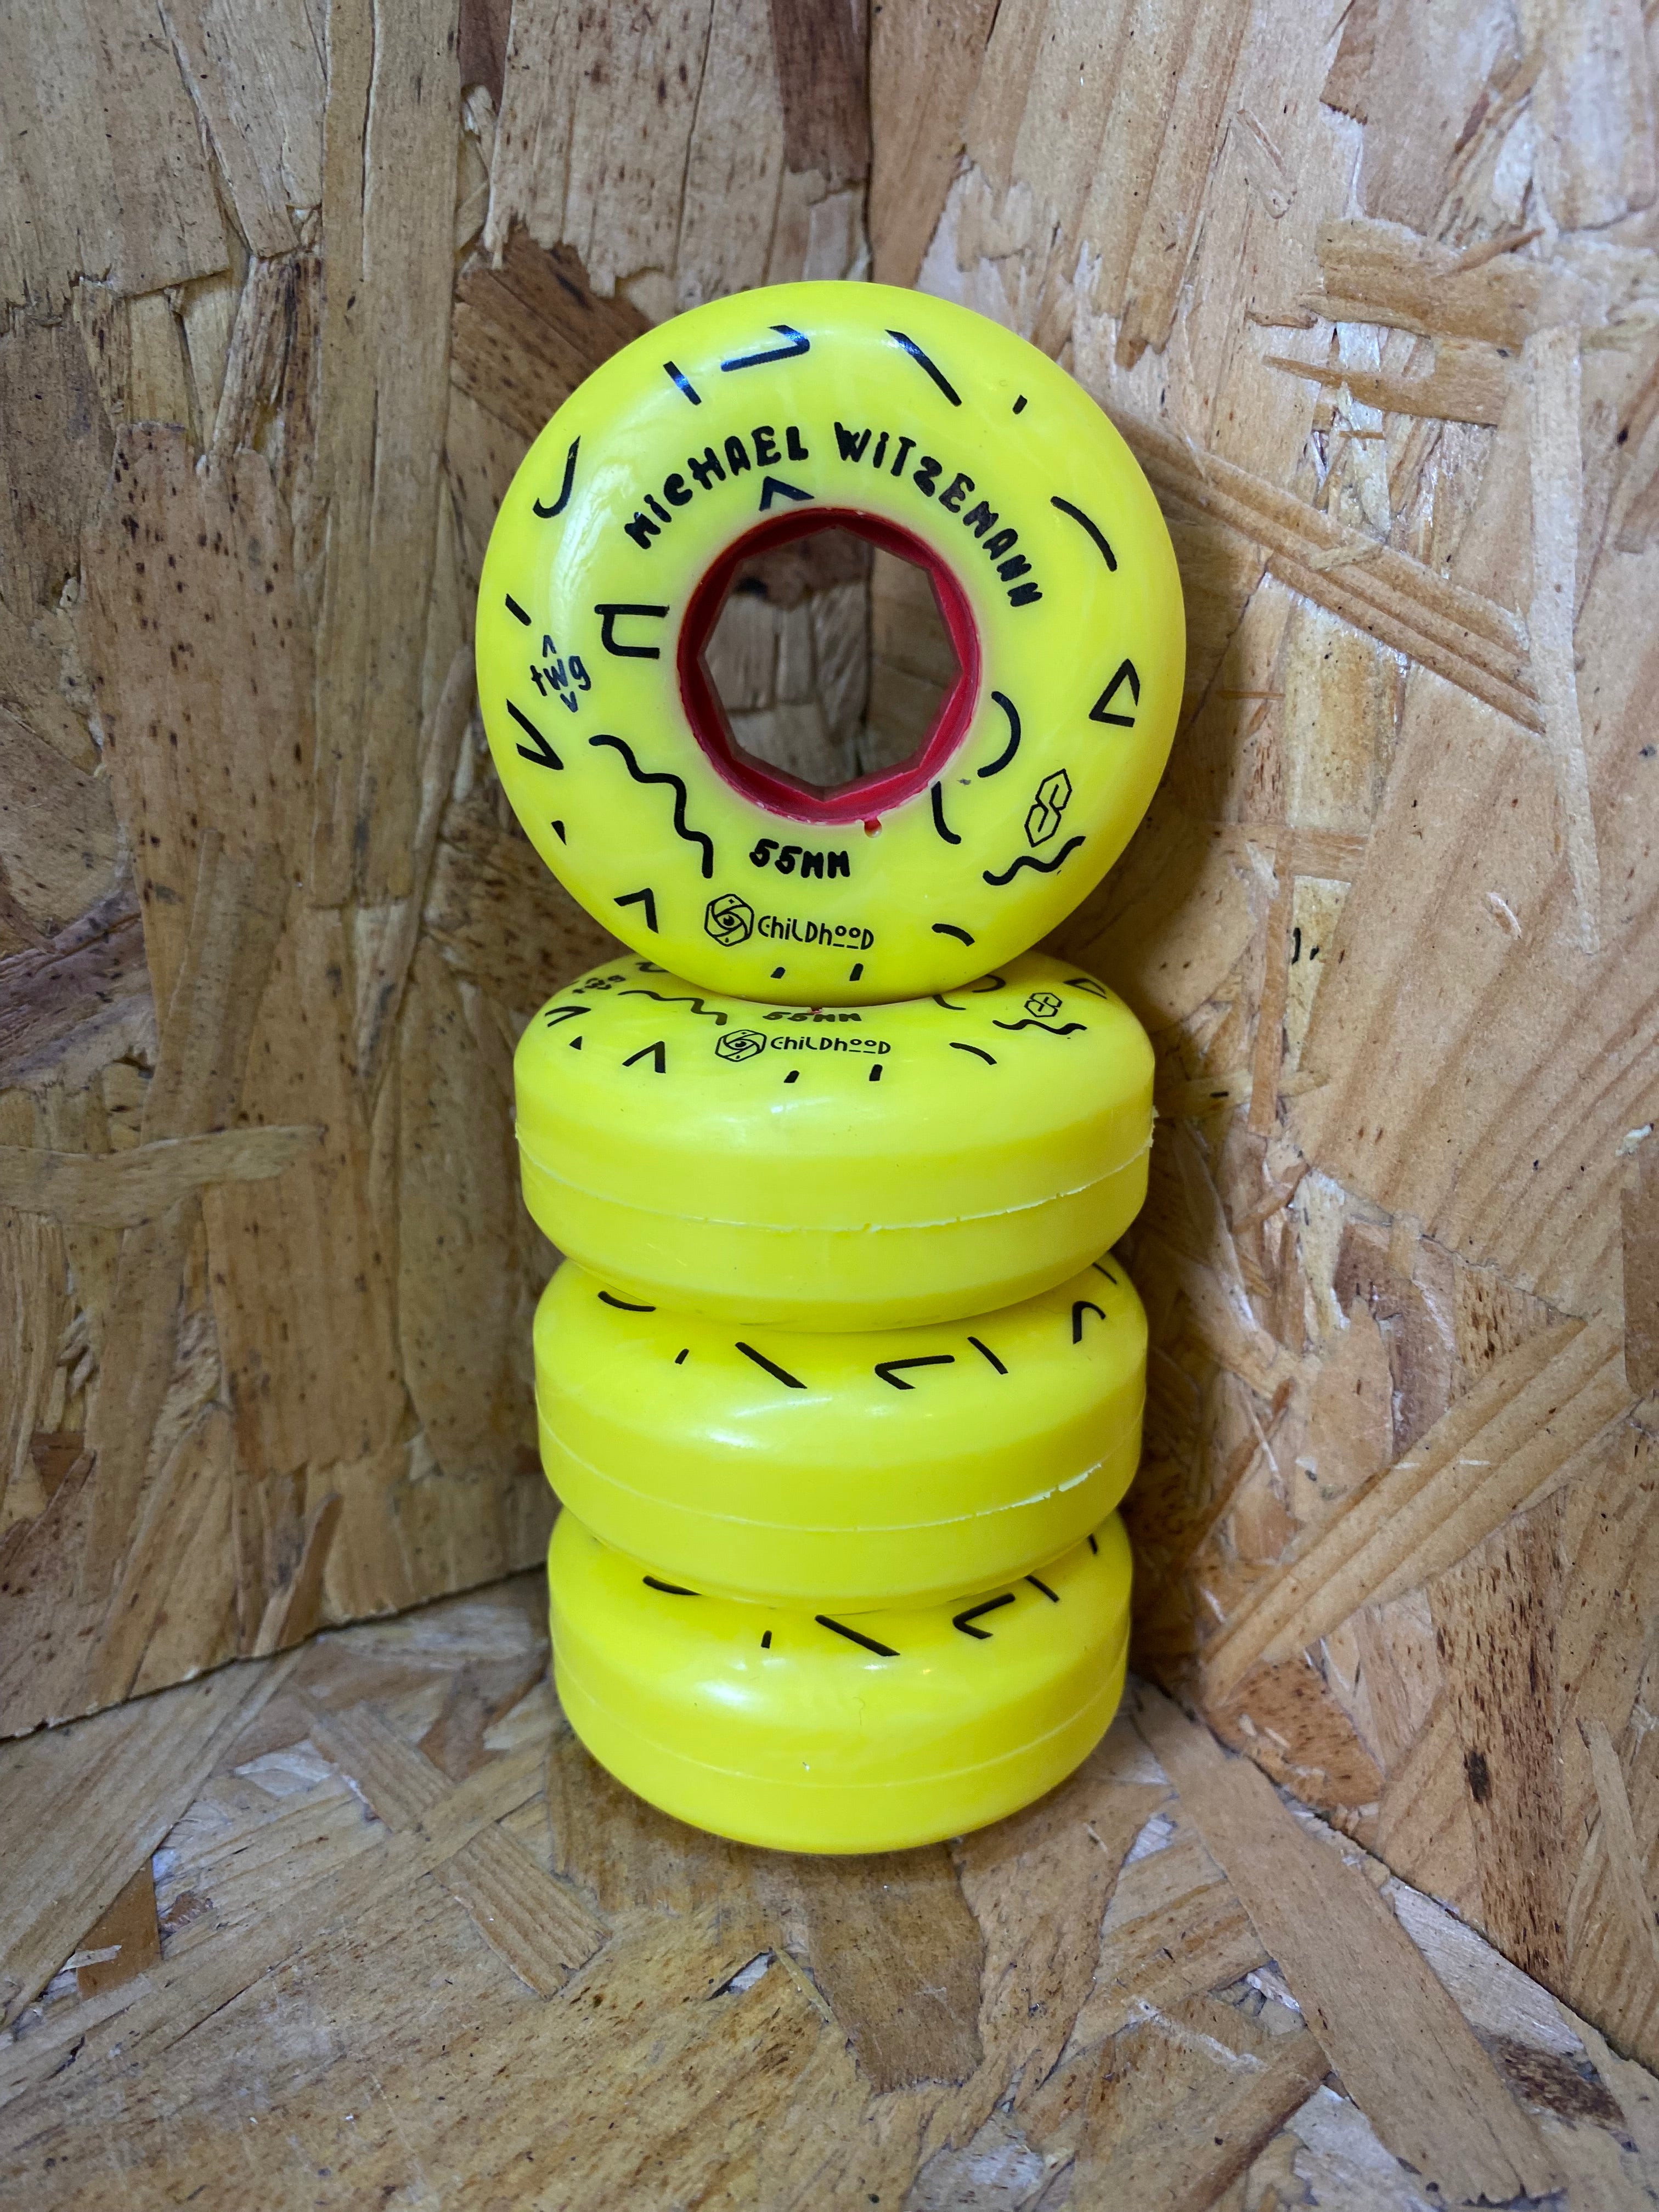 Redeye Michael Witzemann 55mm Inline Skate Wheels